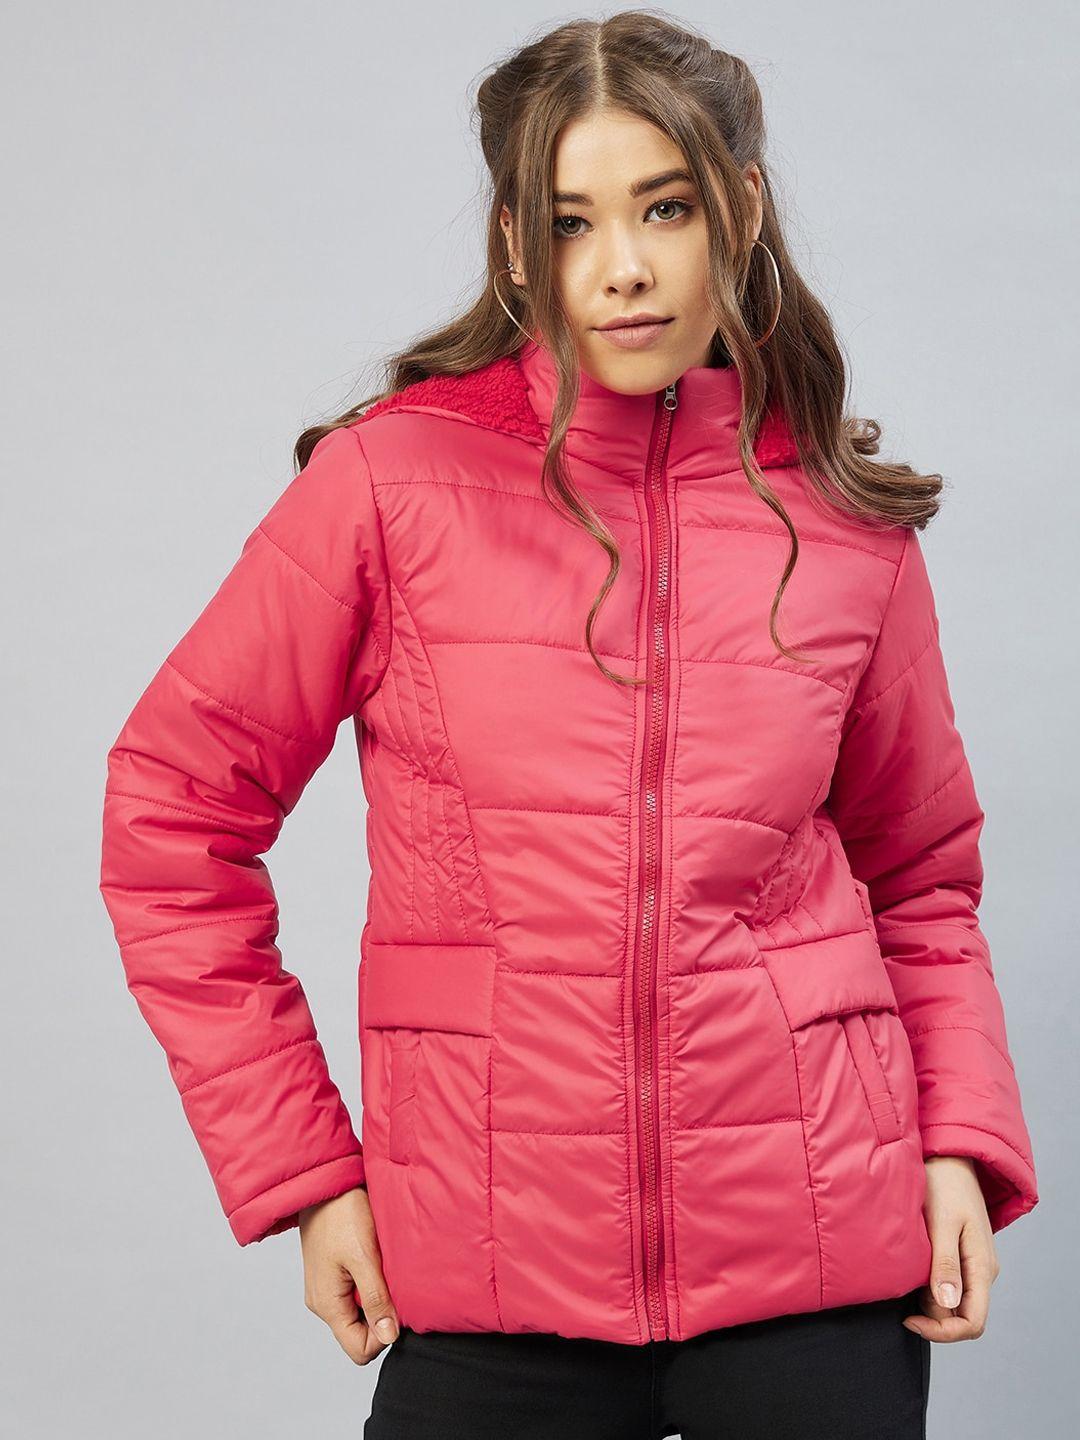 carlton london women pink lightweight parka jacket